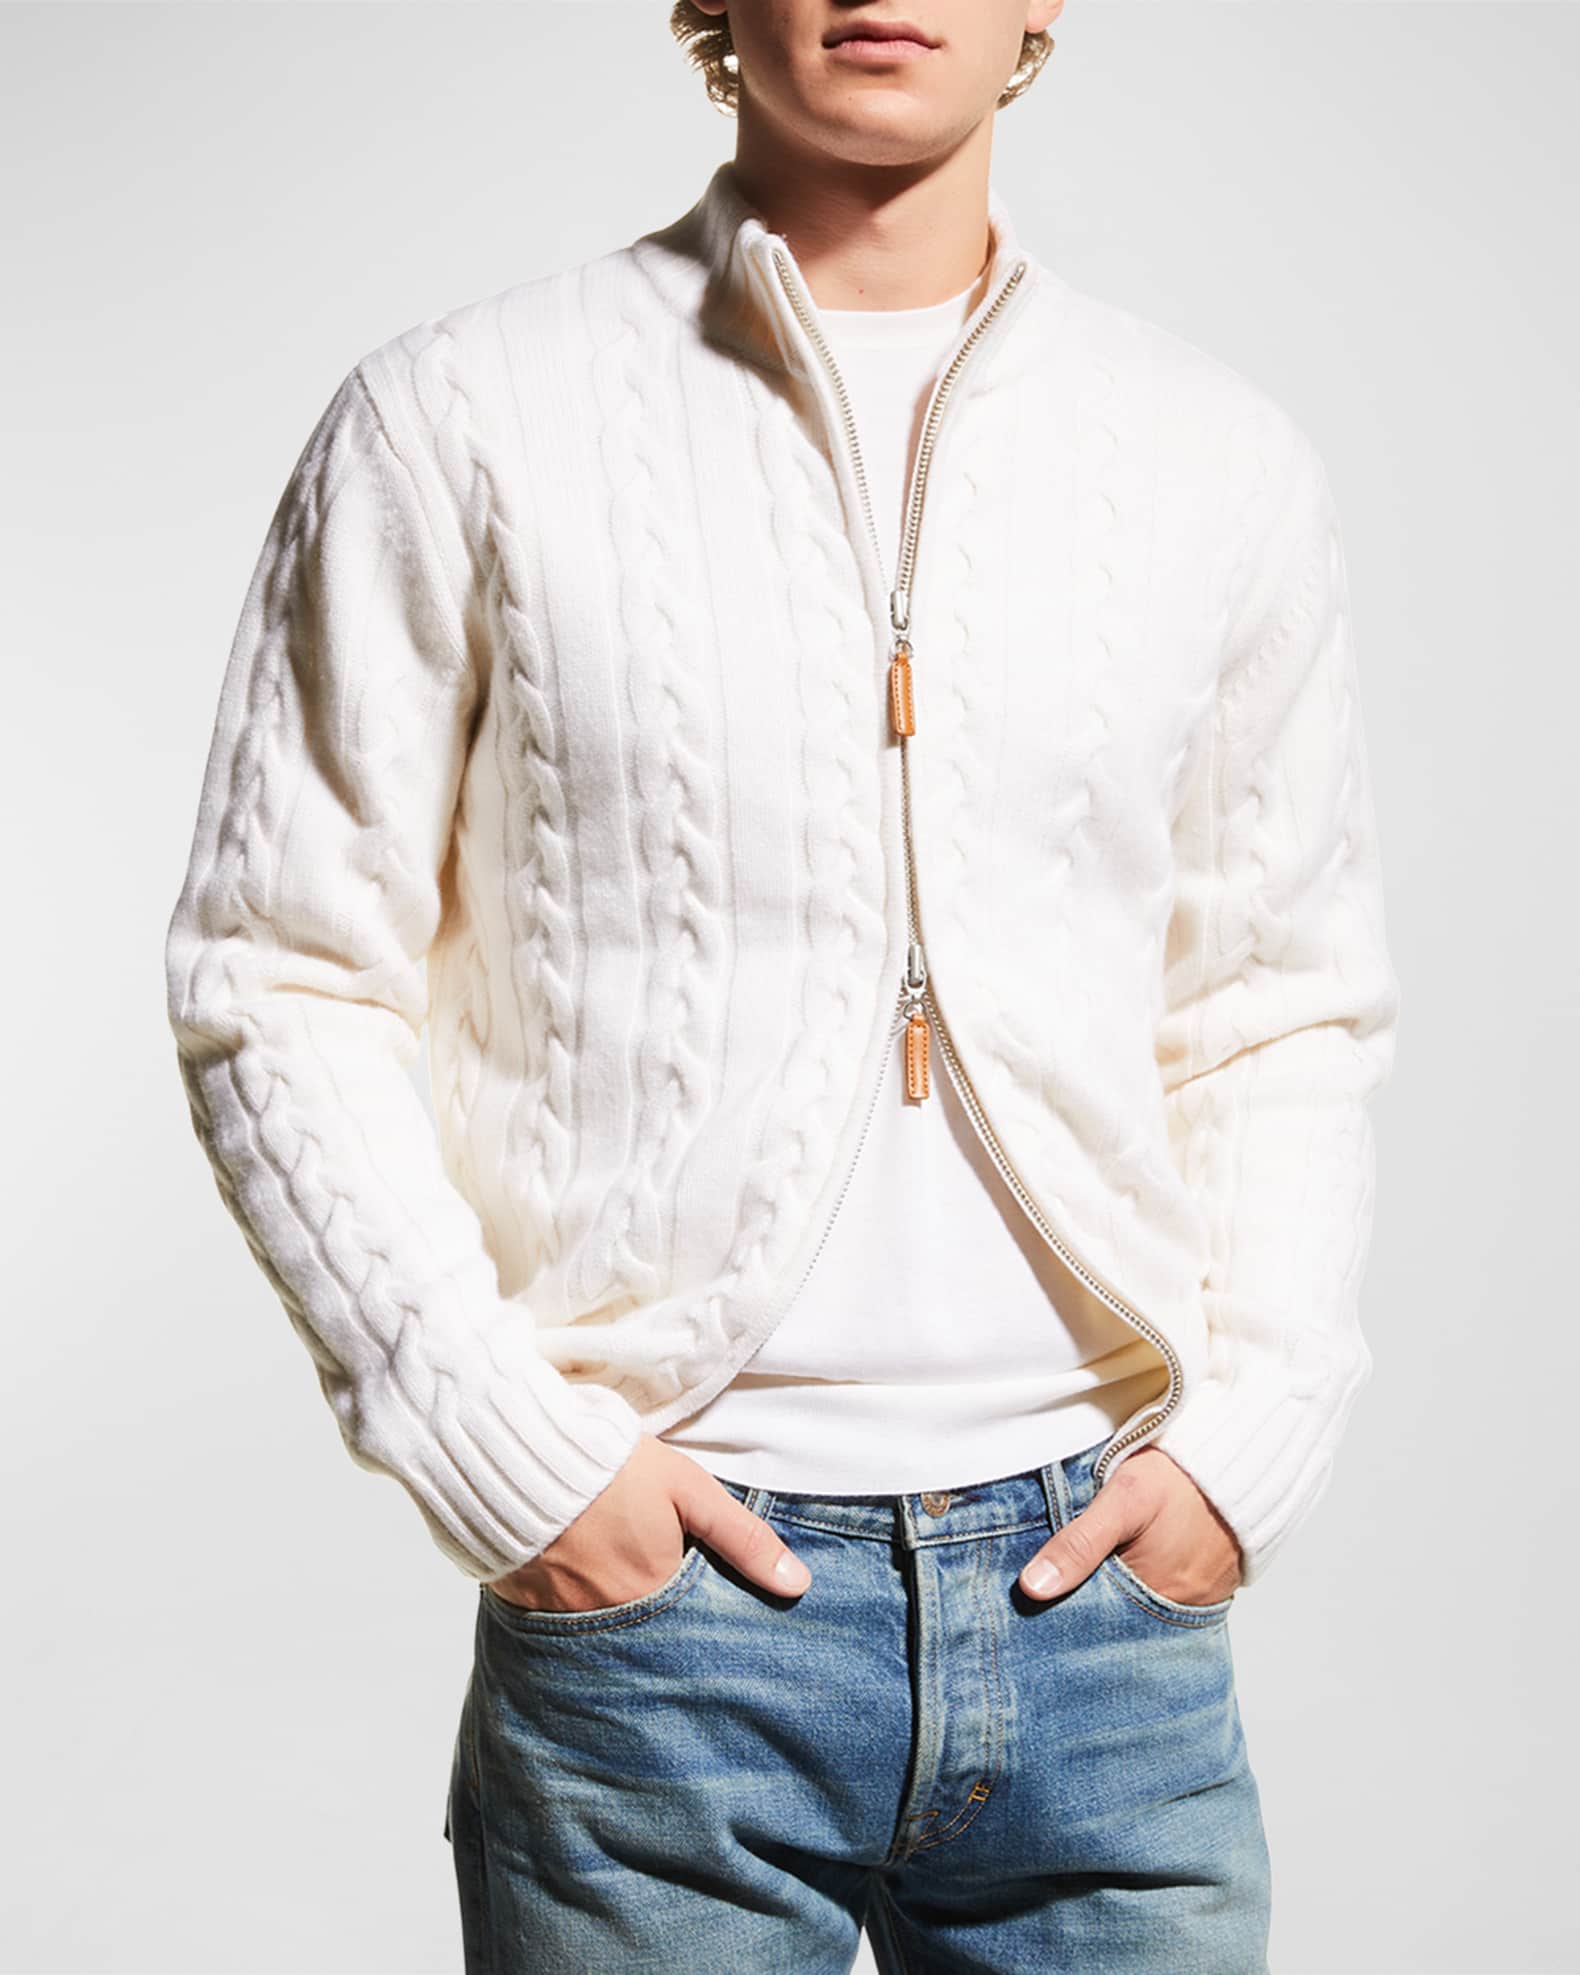 Neiman Marcus Men's Merino Wool-Cashmere Full-Zip Cable Sweater | Neiman Marcus